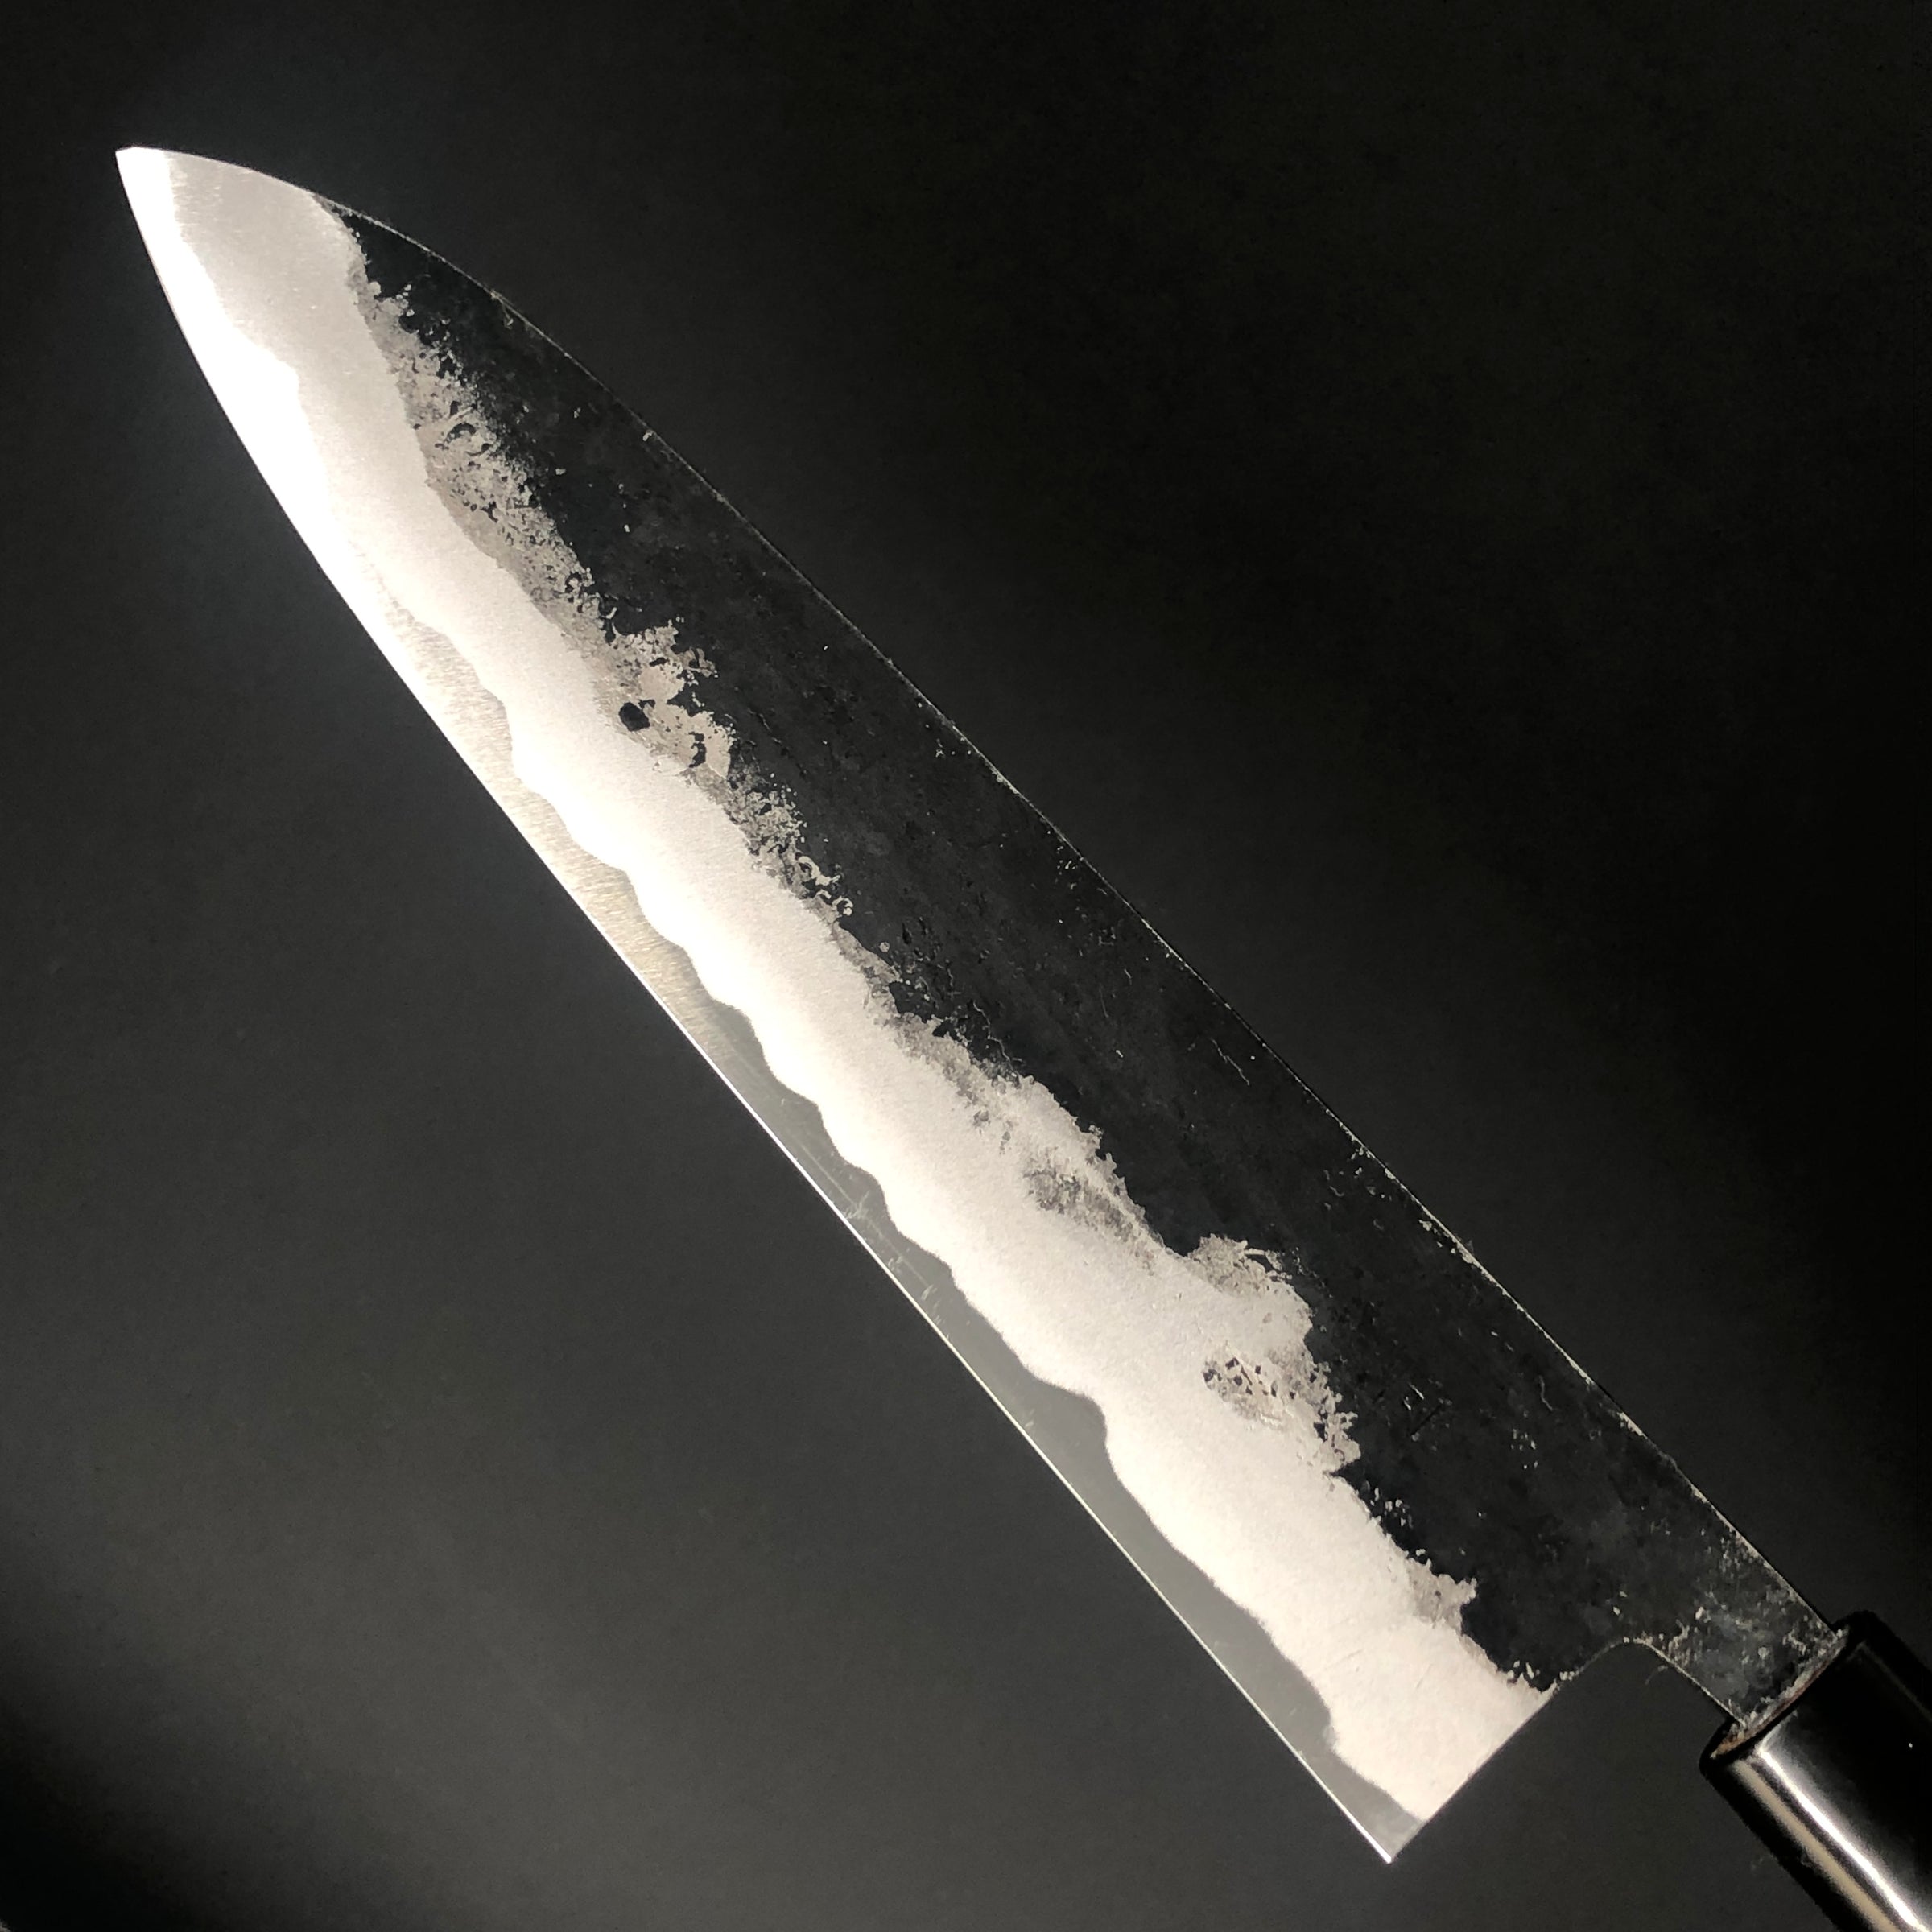 Umai Gyutou Knife - Japanese Chef Knife - All Purpose